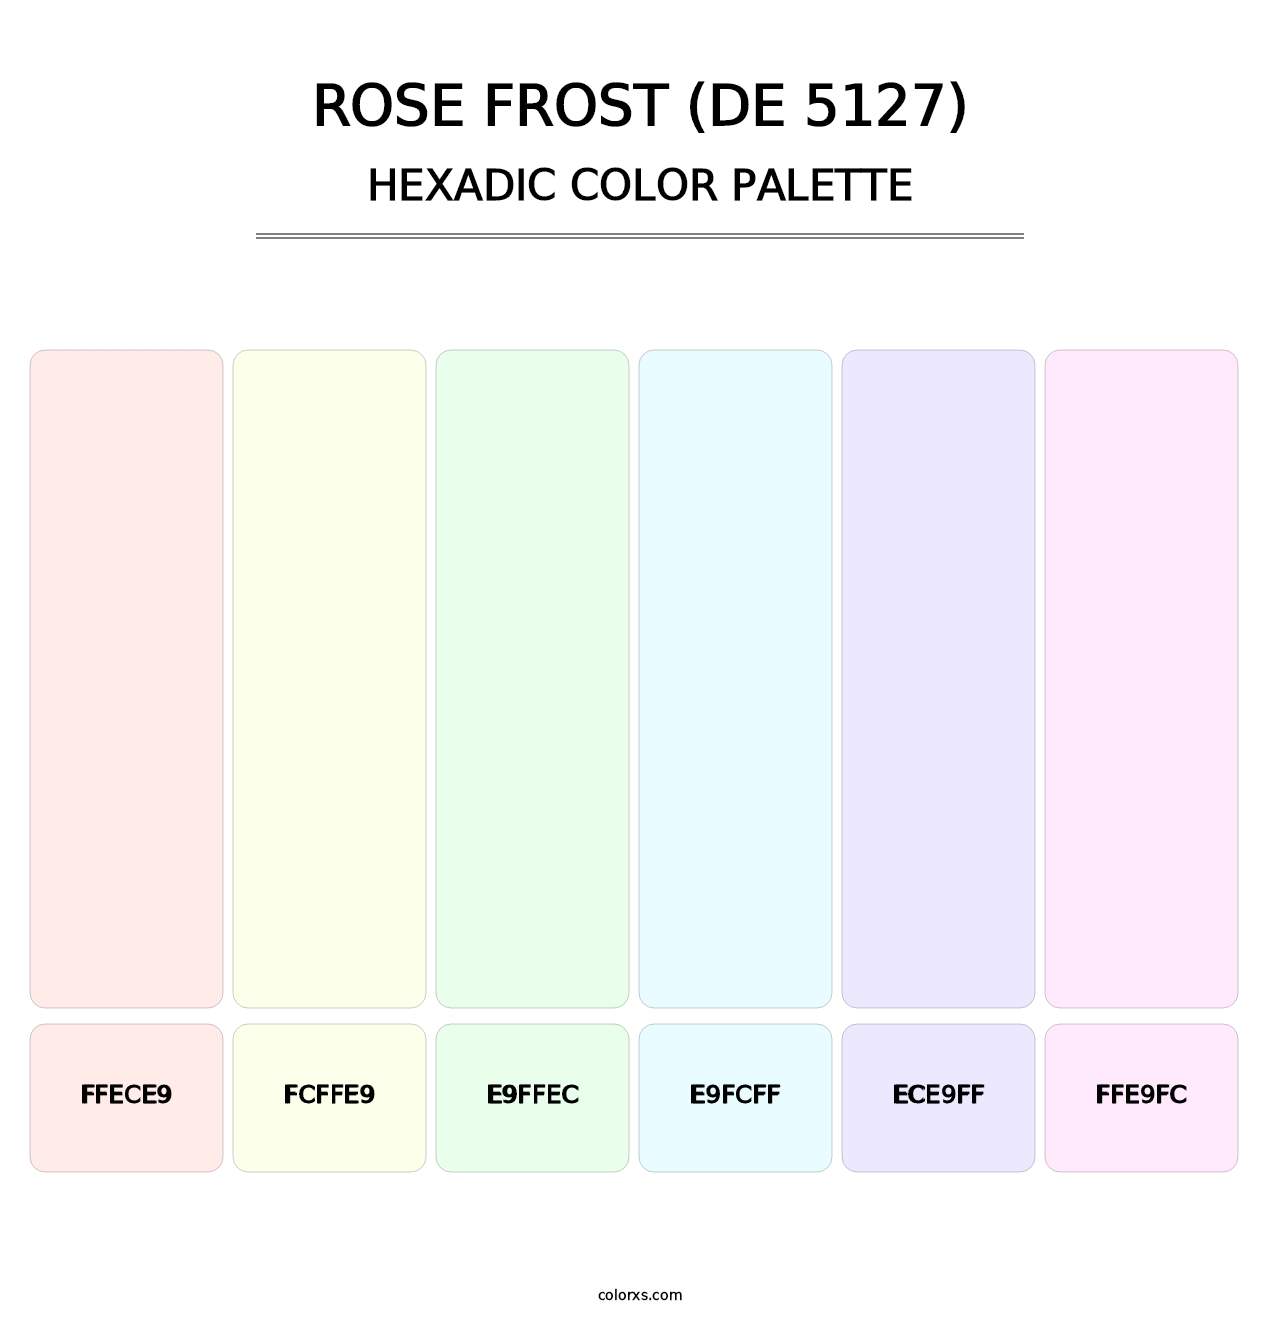 Rose Frost (DE 5127) - Hexadic Color Palette